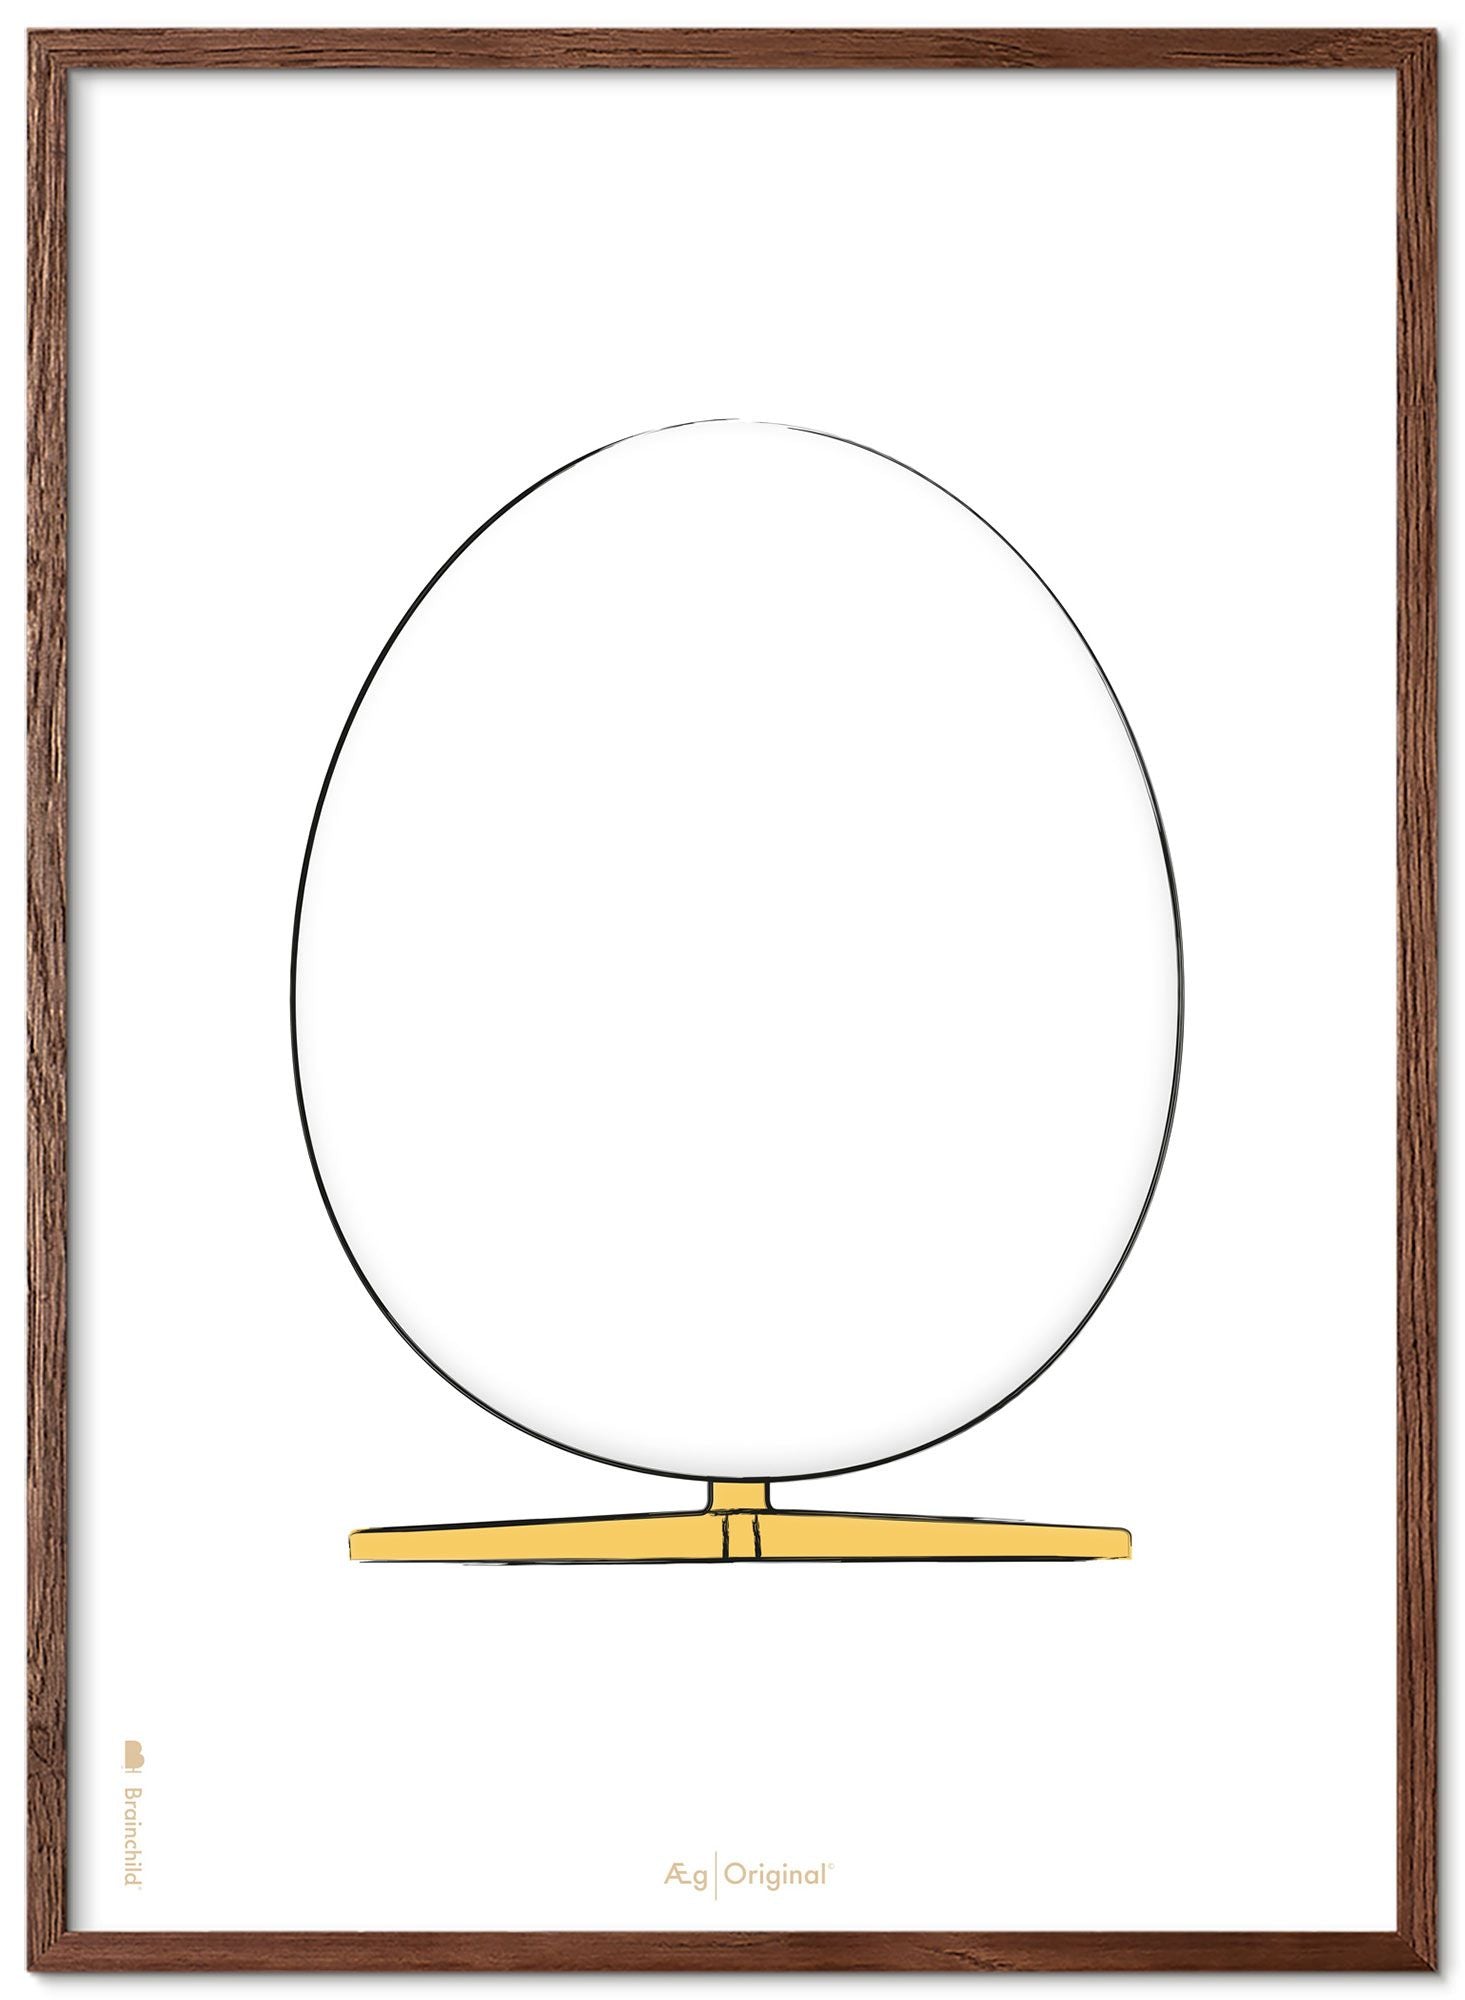 Brainchild The Egg Design Sketch Poster Frame Made Of Dark Wood 70x100 Cm, White Background